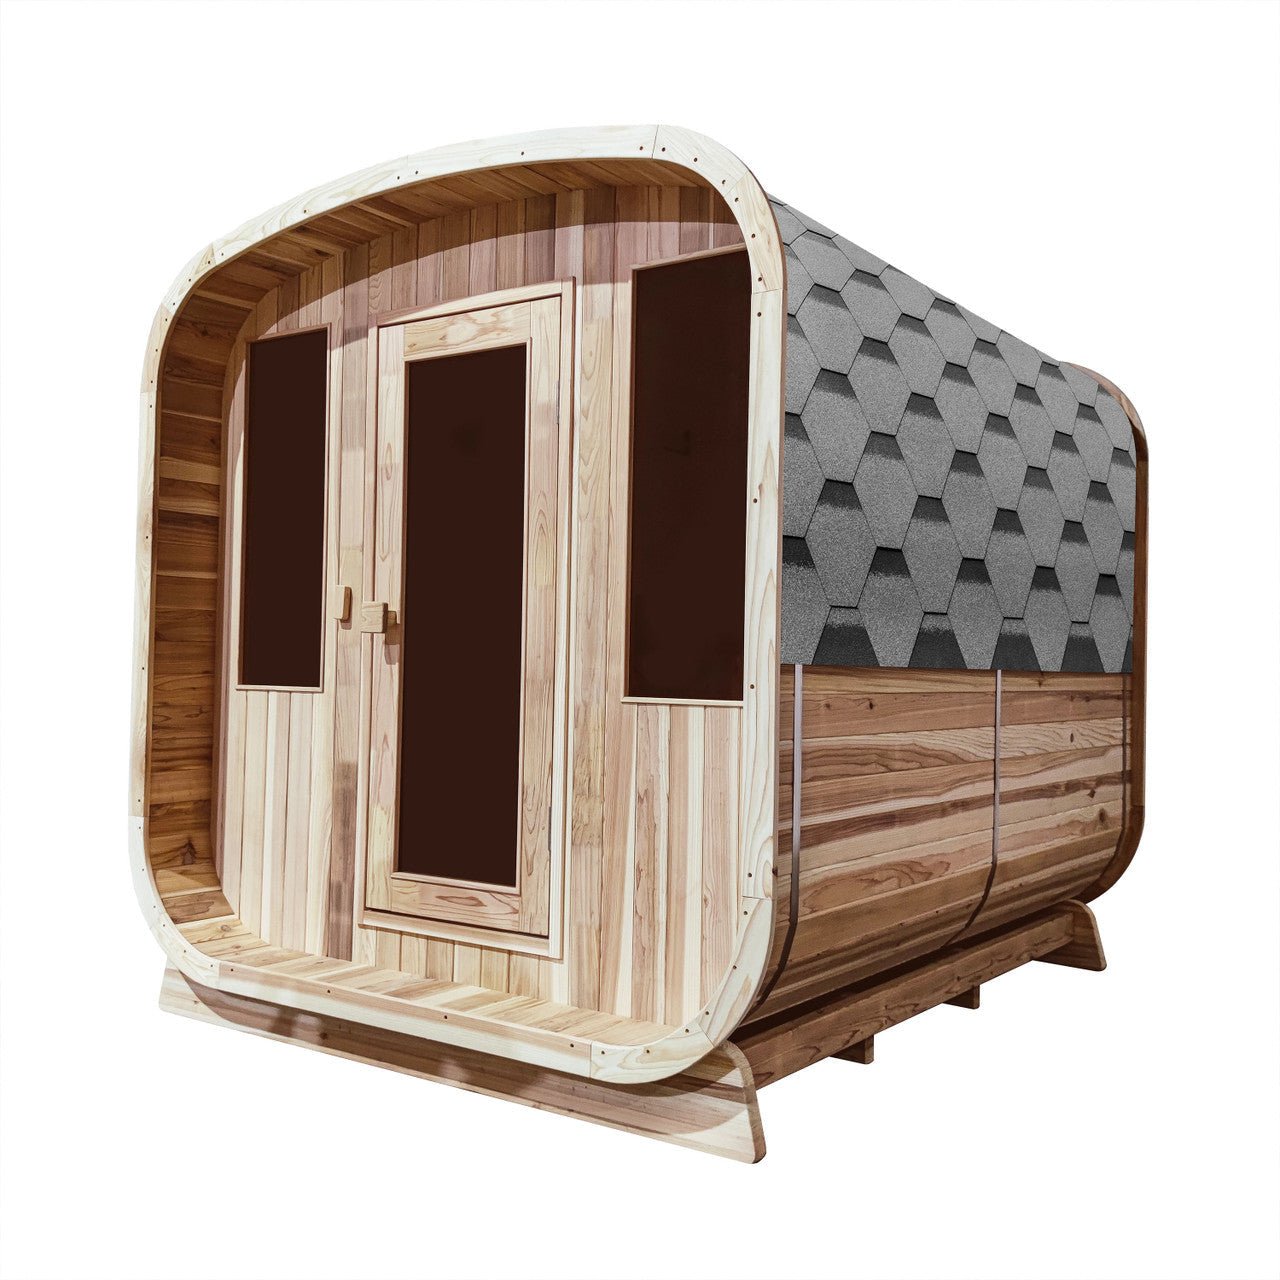 ALEKO Outdoor Rustic Cedar Square Sauna – 4 Person – 4.5 kW UL Certified Electric Heater - The Sauna World